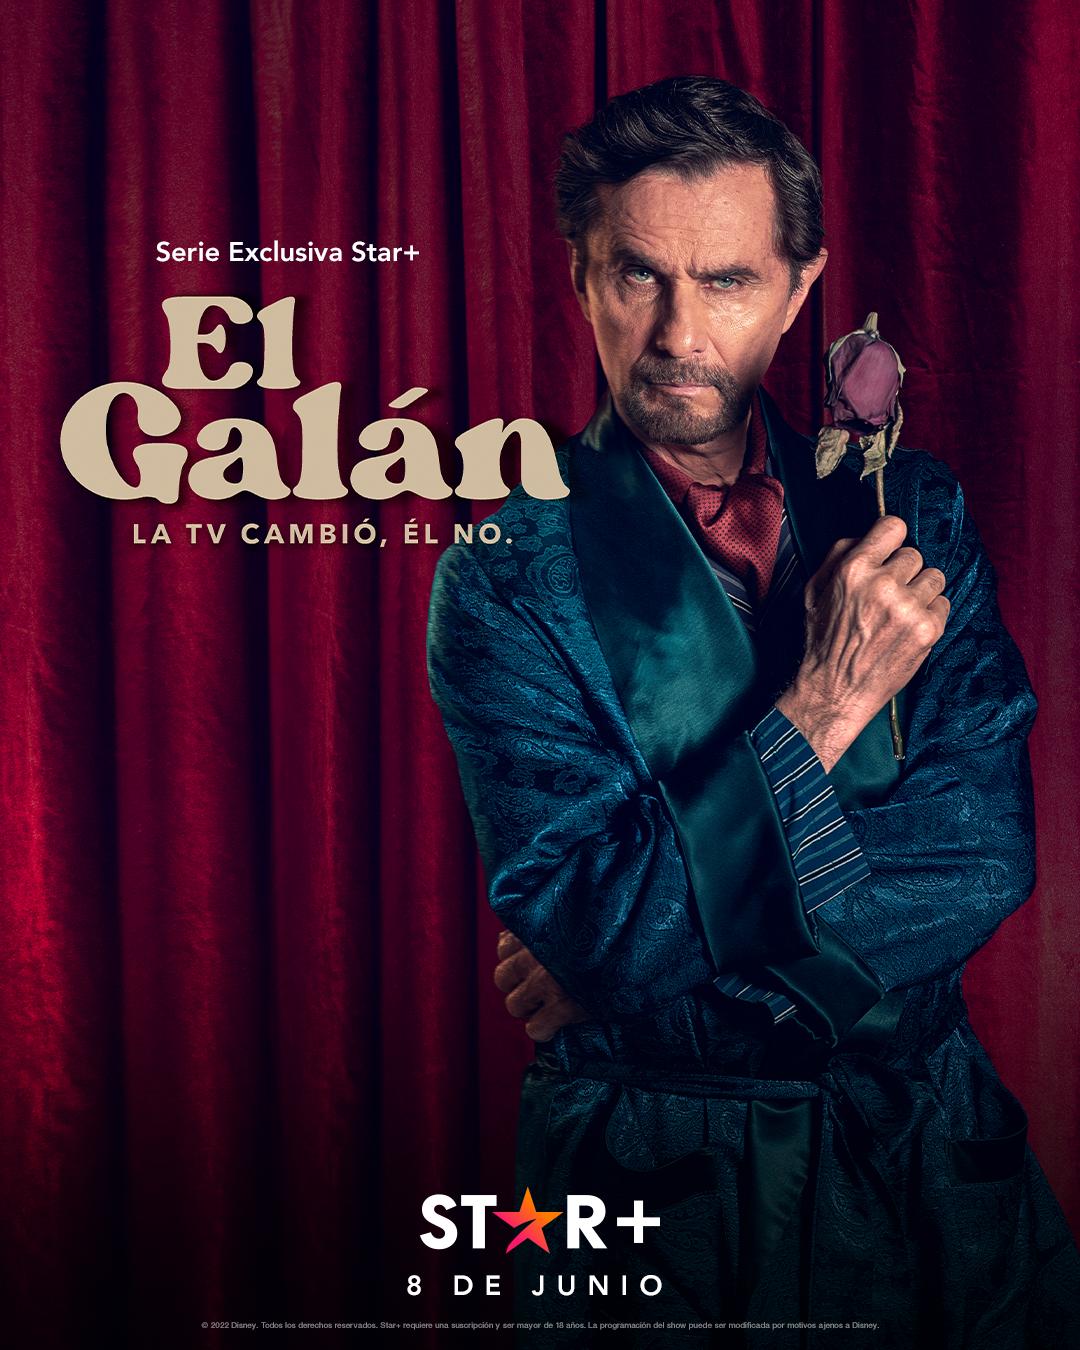 TV ratings for The Gallant. TV Changed, He Didn't (El Galán. La Tv Cambió, Él No) in Australia. Star+ TV series